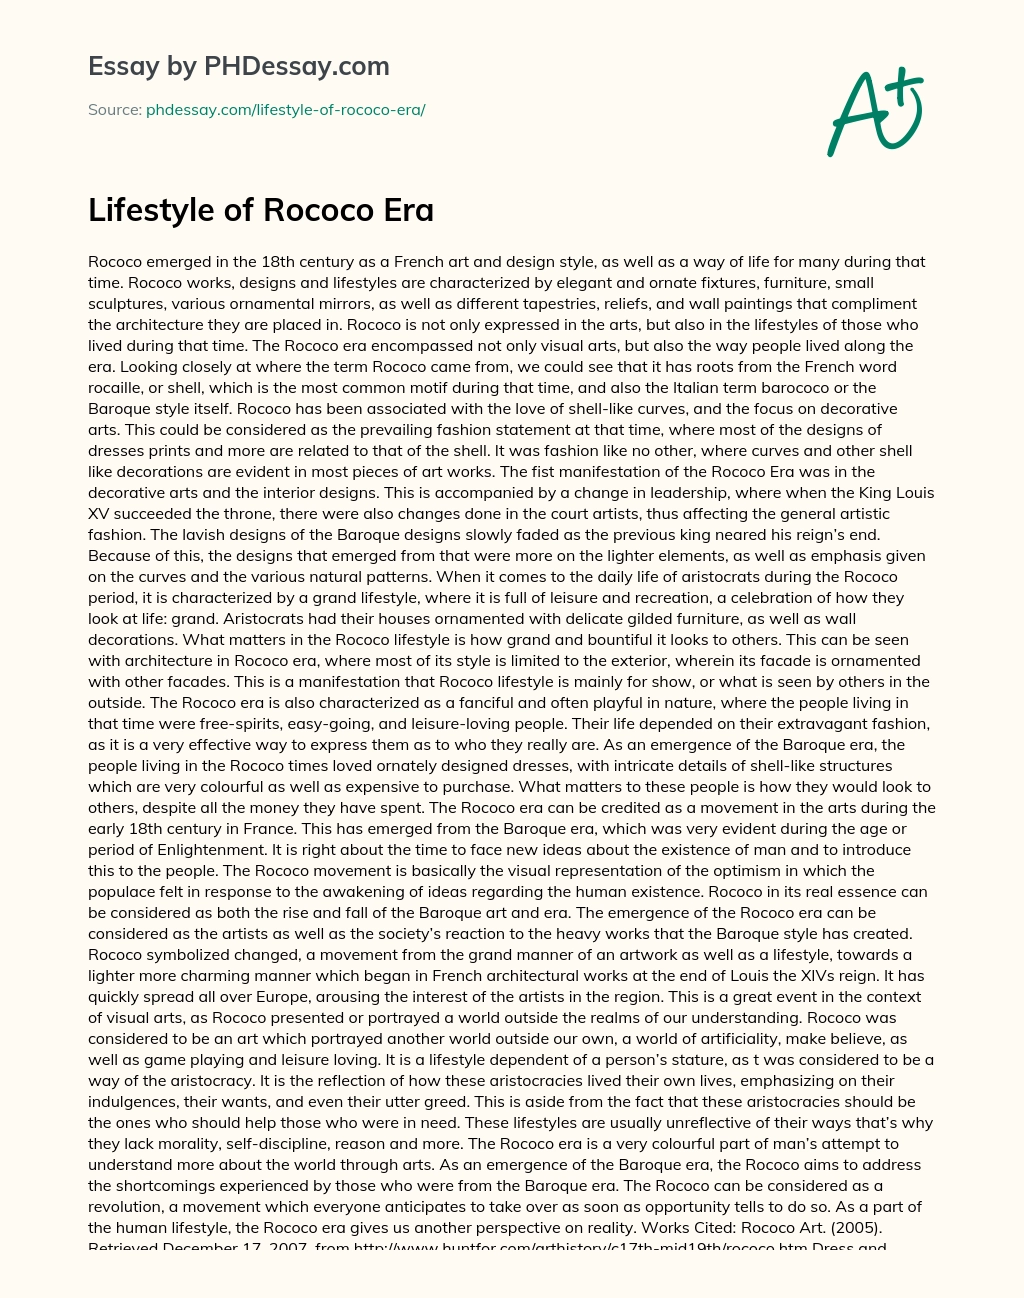 Lifestyle of Rococo Era essay